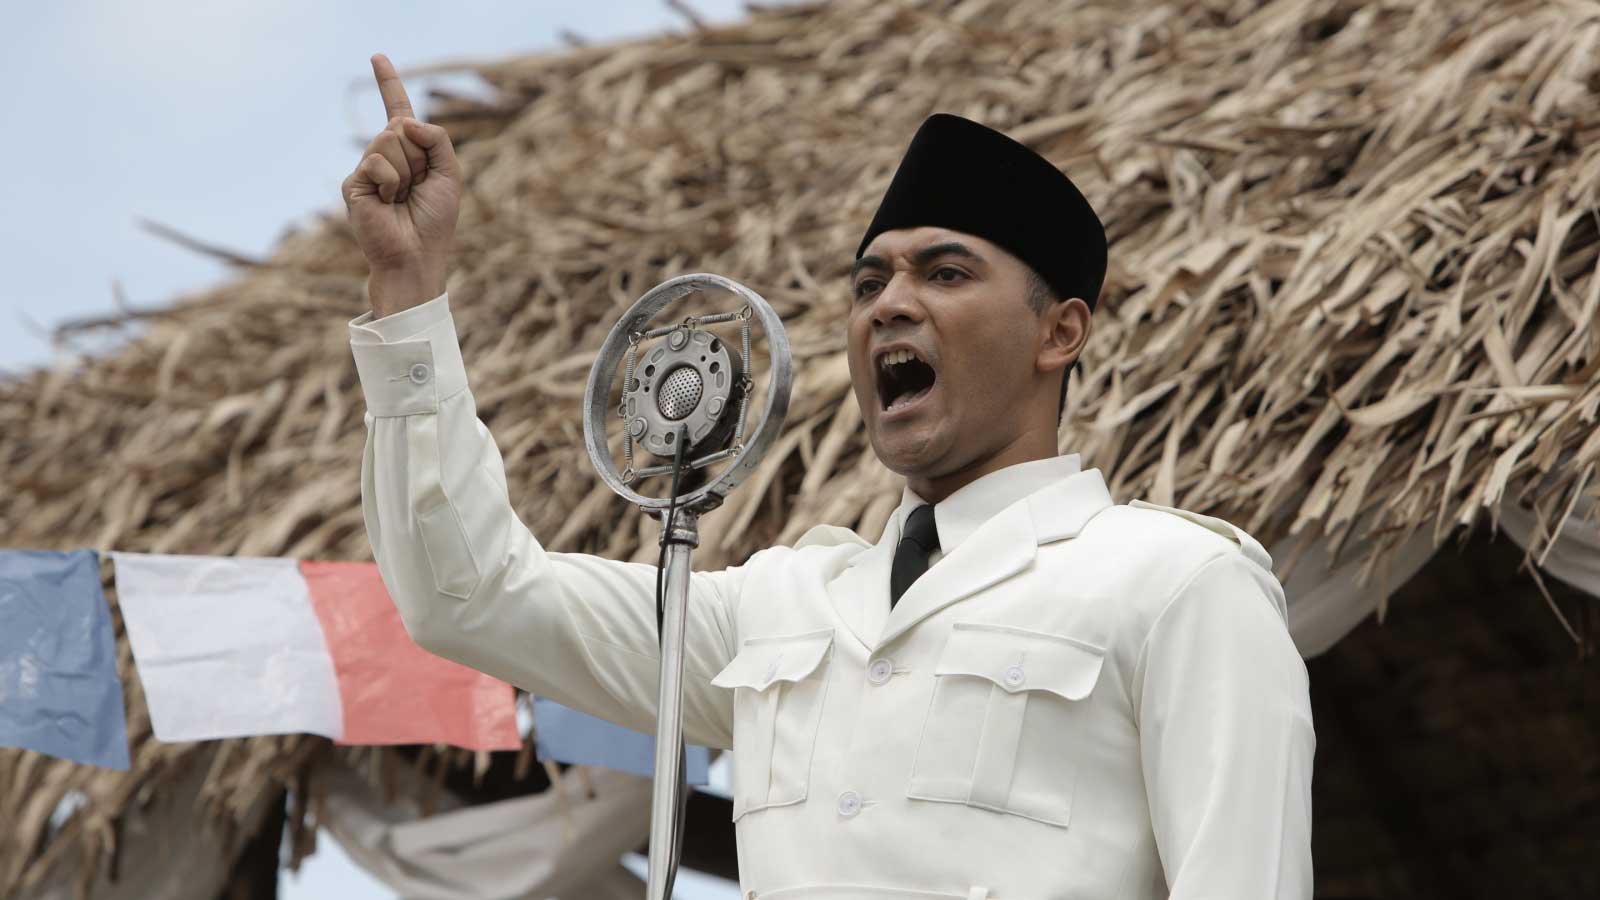 Lima Film Pahlawan Indonesia Paling Epik dengan Sinematografi yang Apik